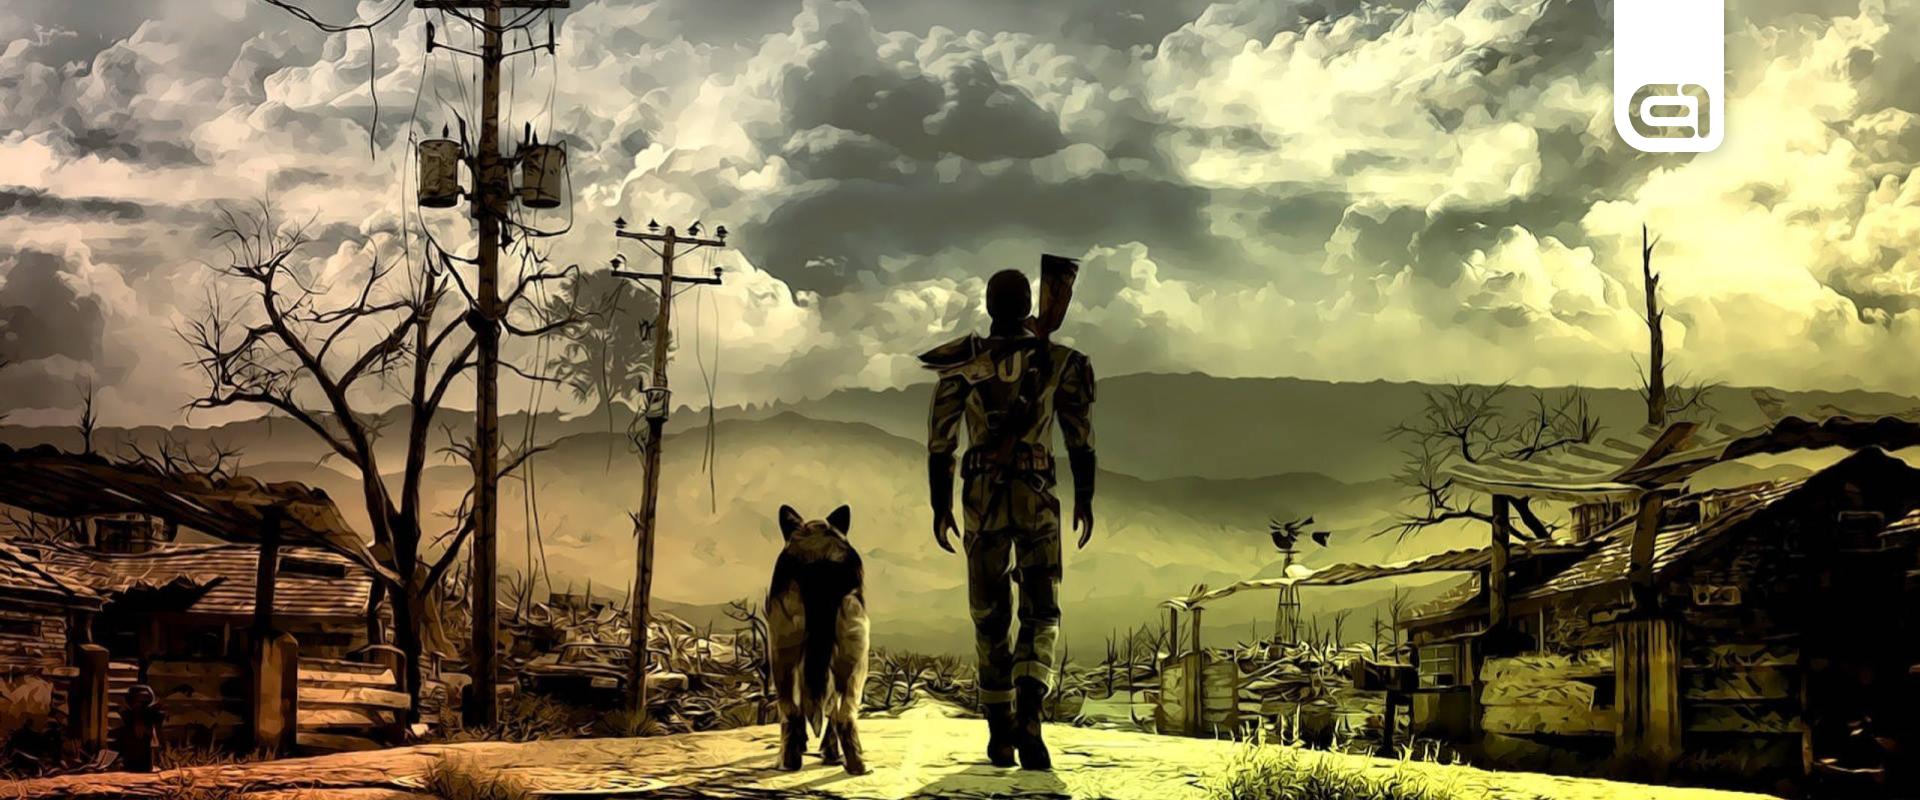 Friss képeken a Fallout TV-sorozat